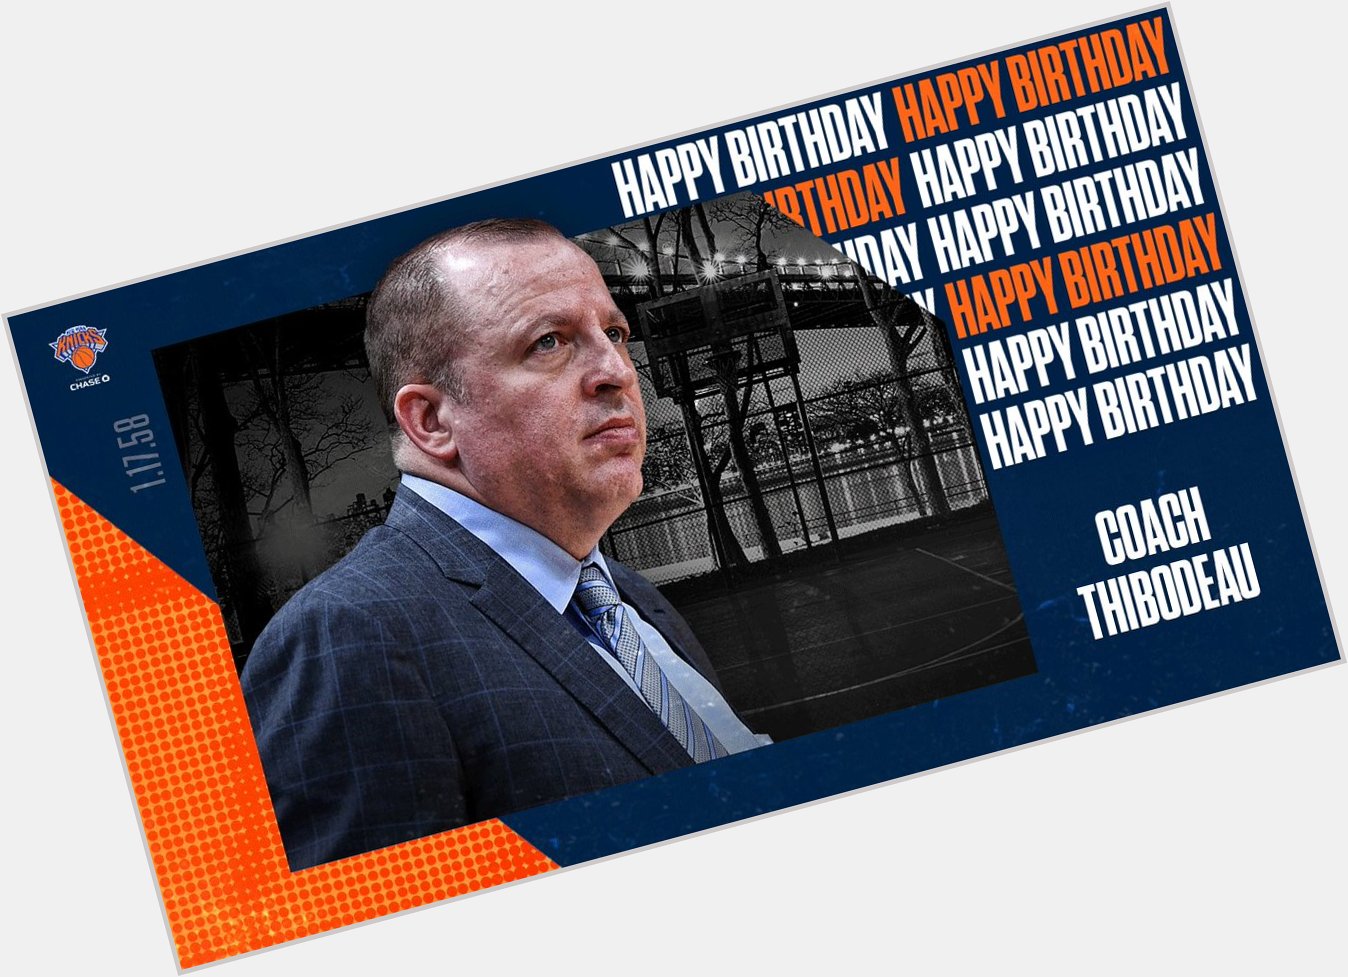 Happy Birthday to our head coach, Tom Thibodeau! 